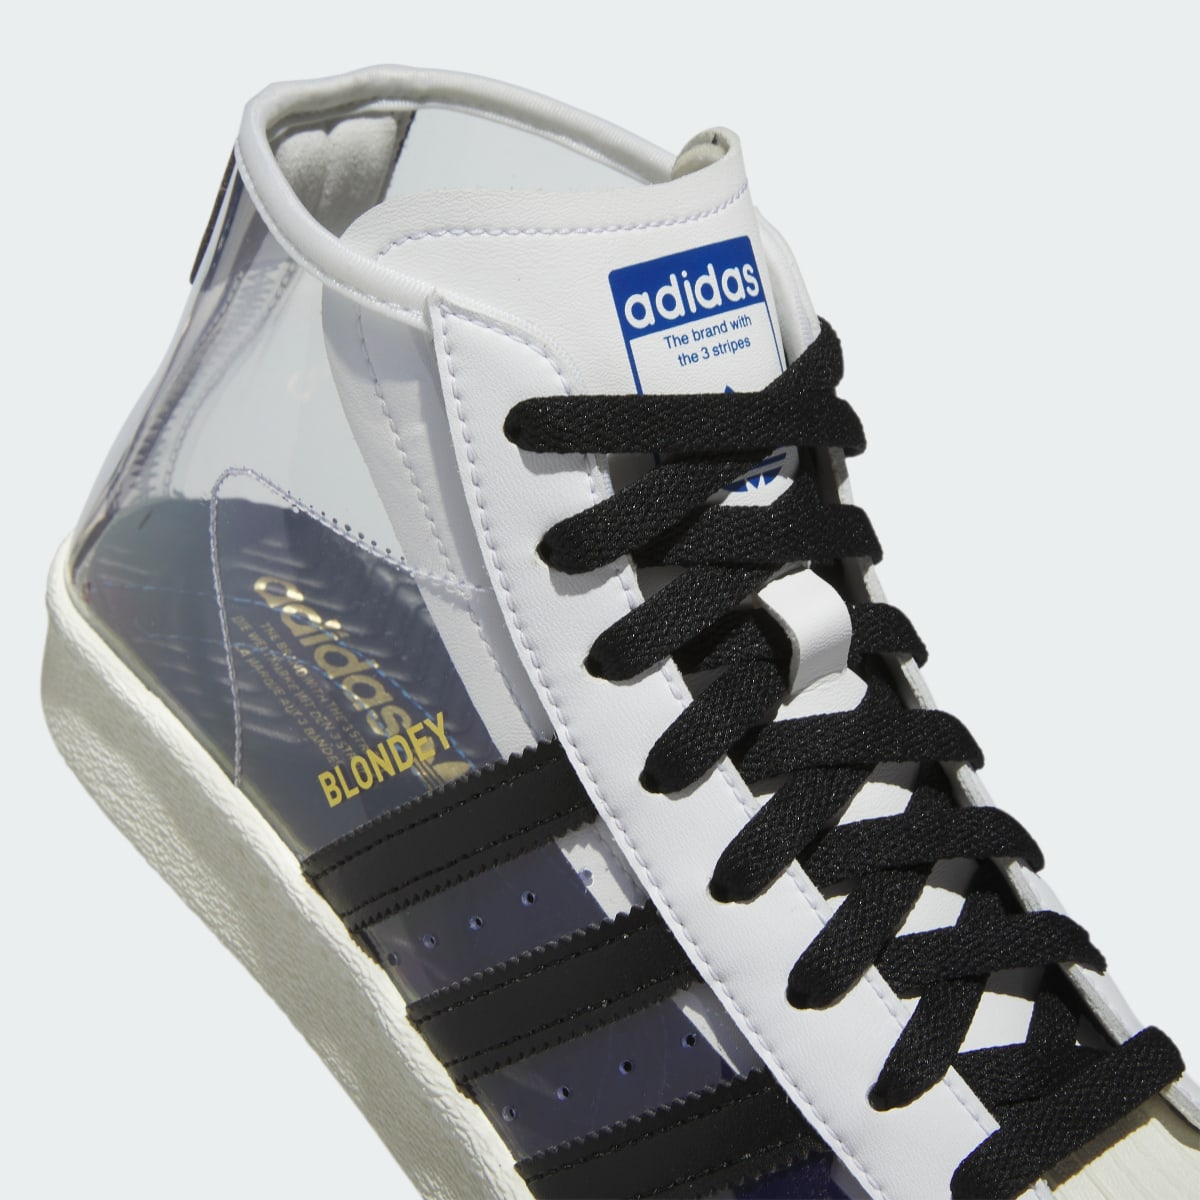 Adidas Blondey Pro Model ADV Schuh. 11